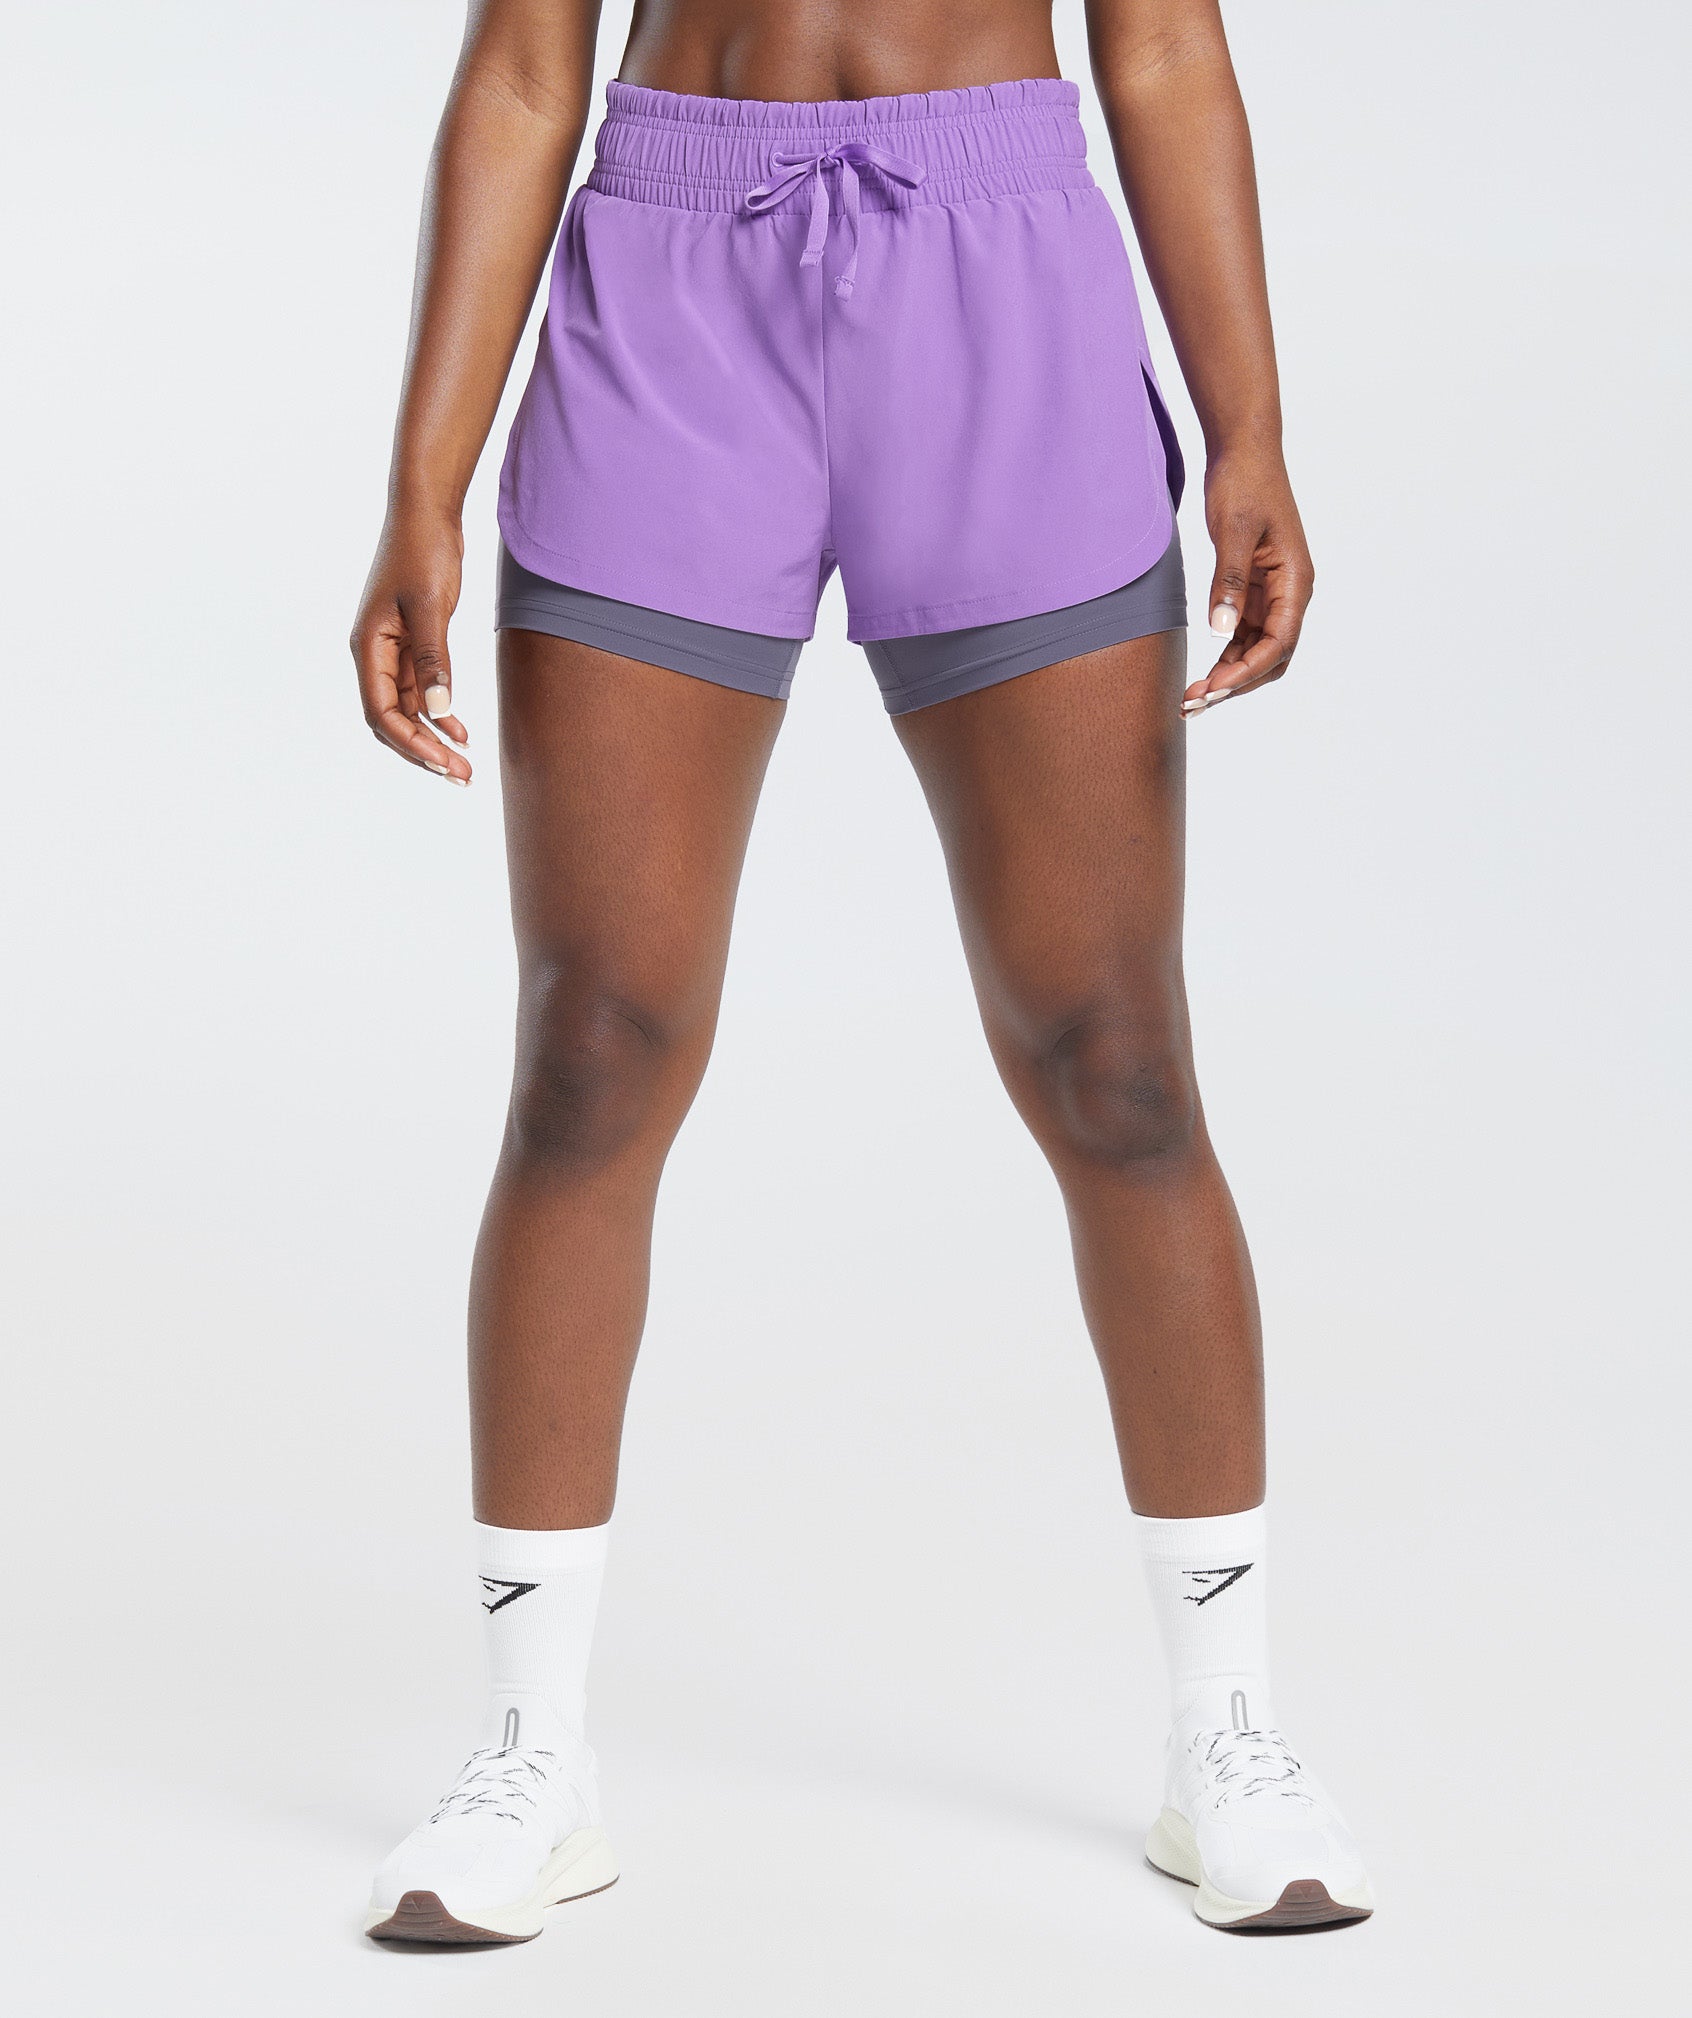 Gymshark Running 2 In 1 Shorts - Grape Purple/Dewberry Purple